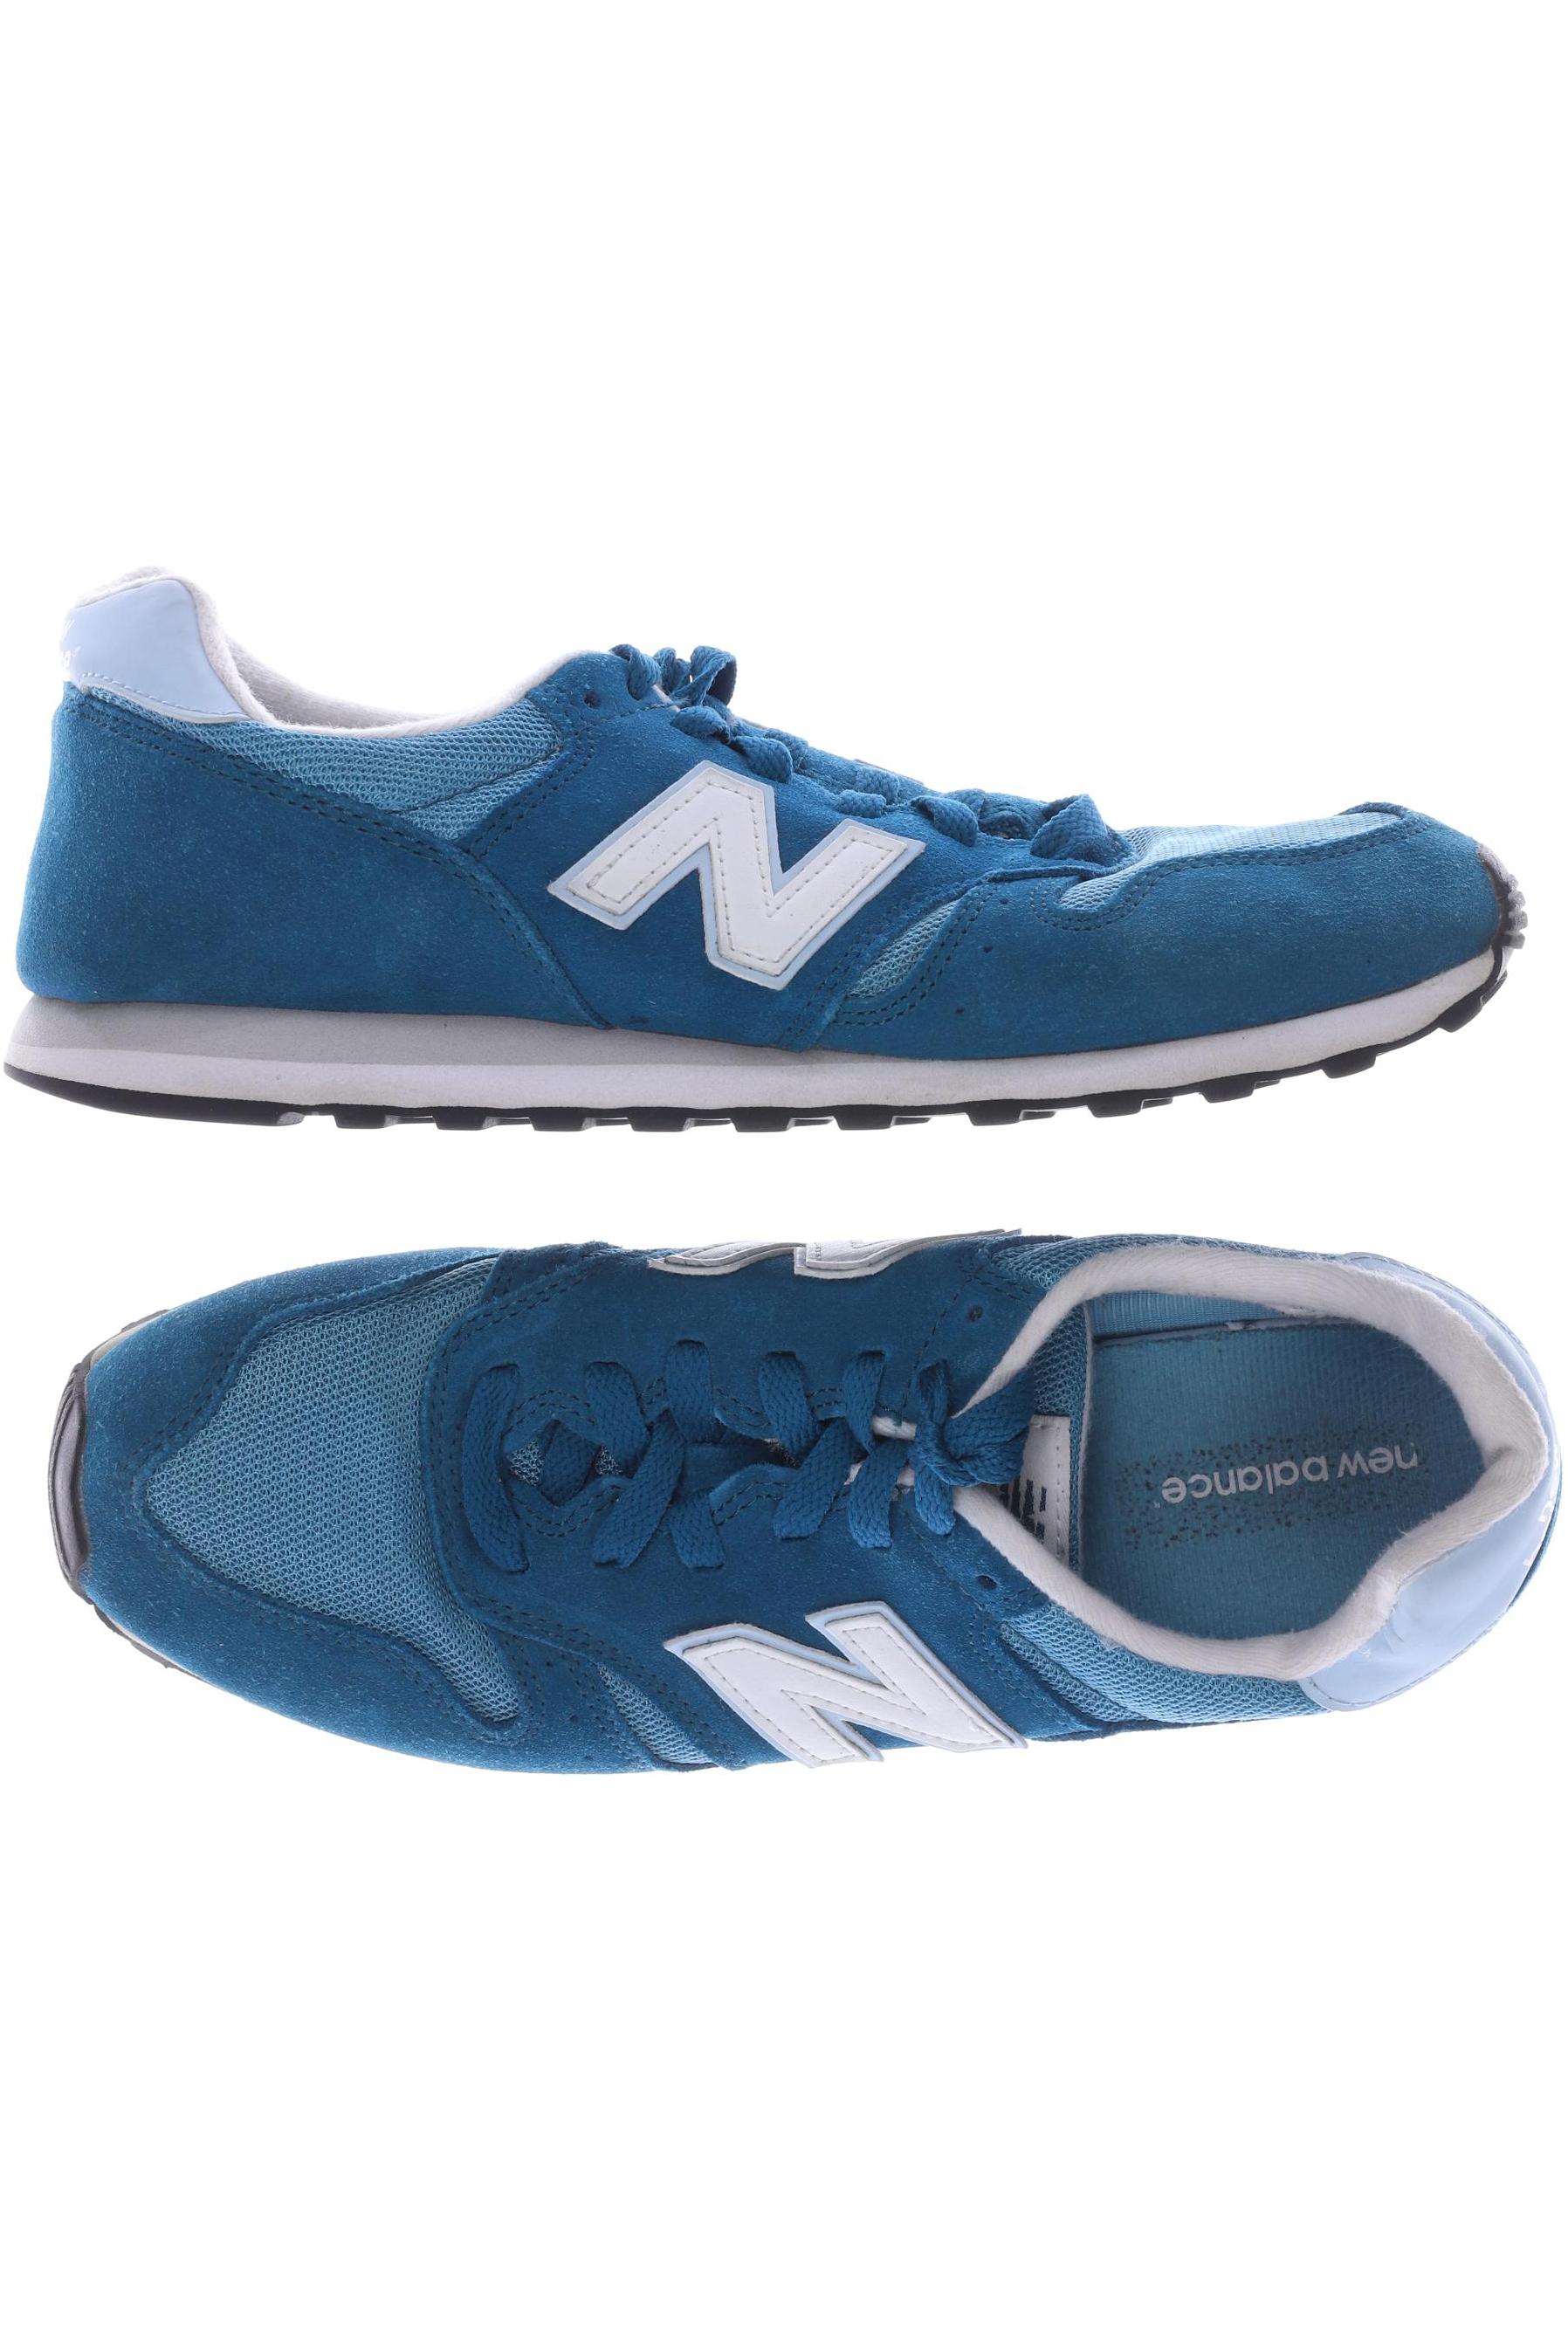 New Balance Herren Sneakers, blau von New Balance